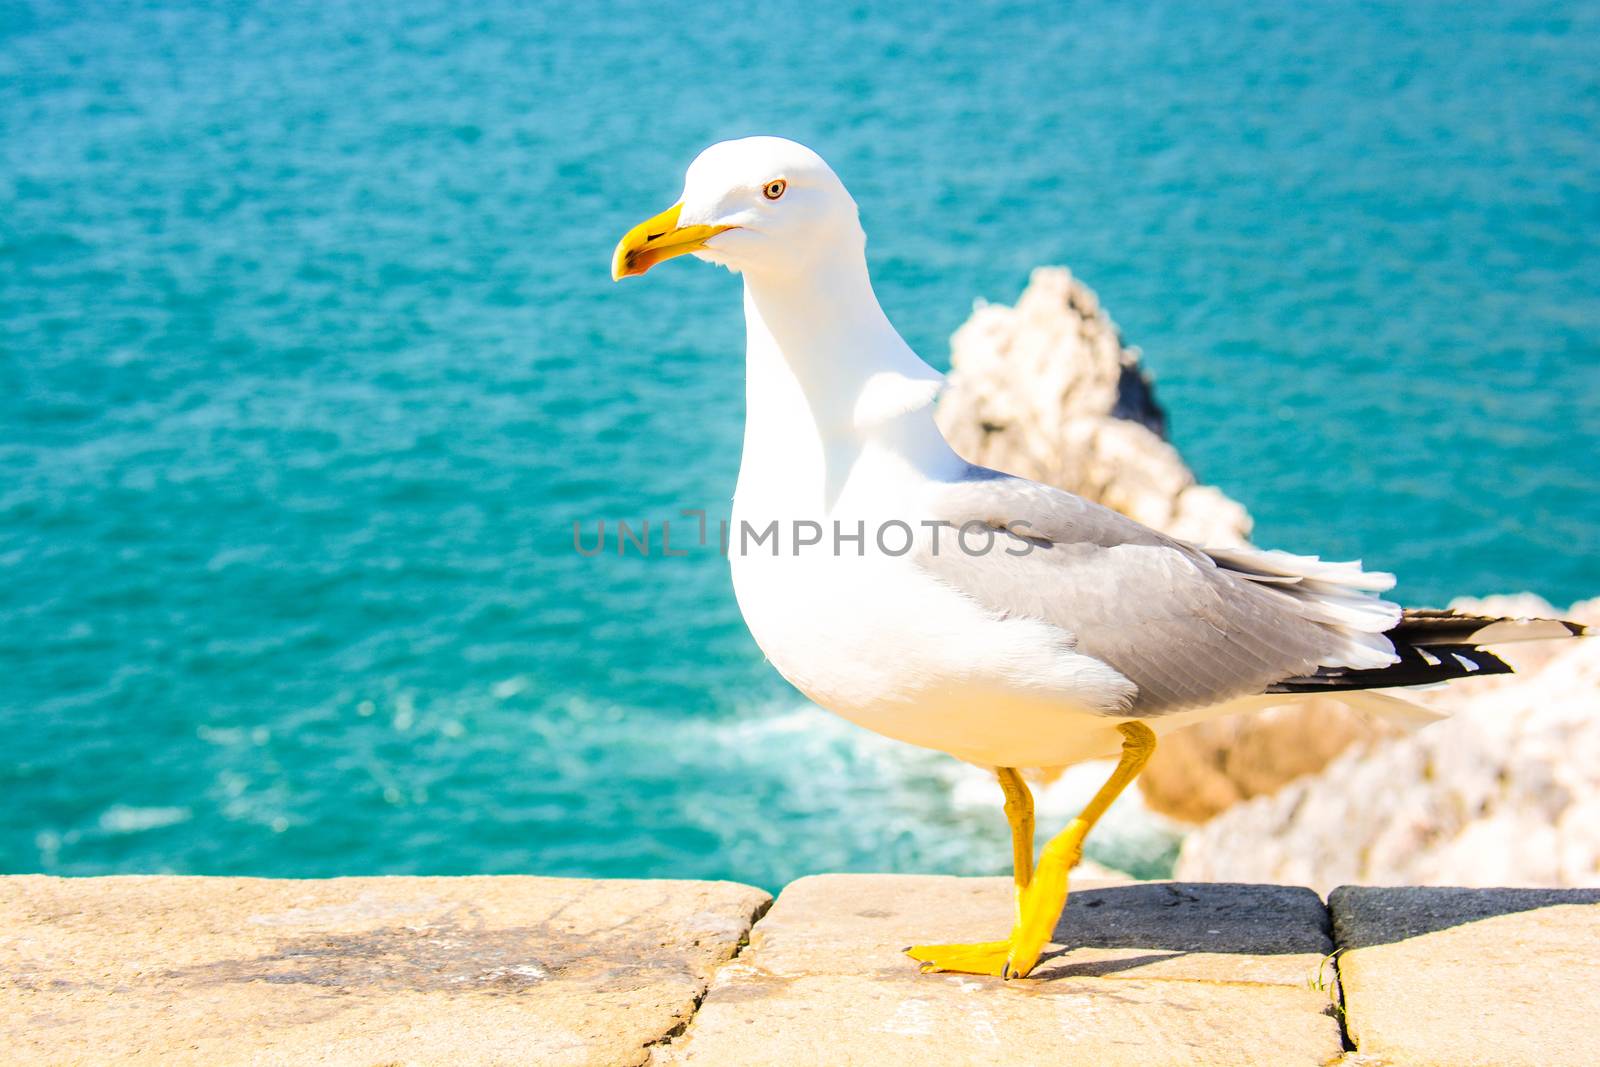 Seagull show itself as a modern fashion model